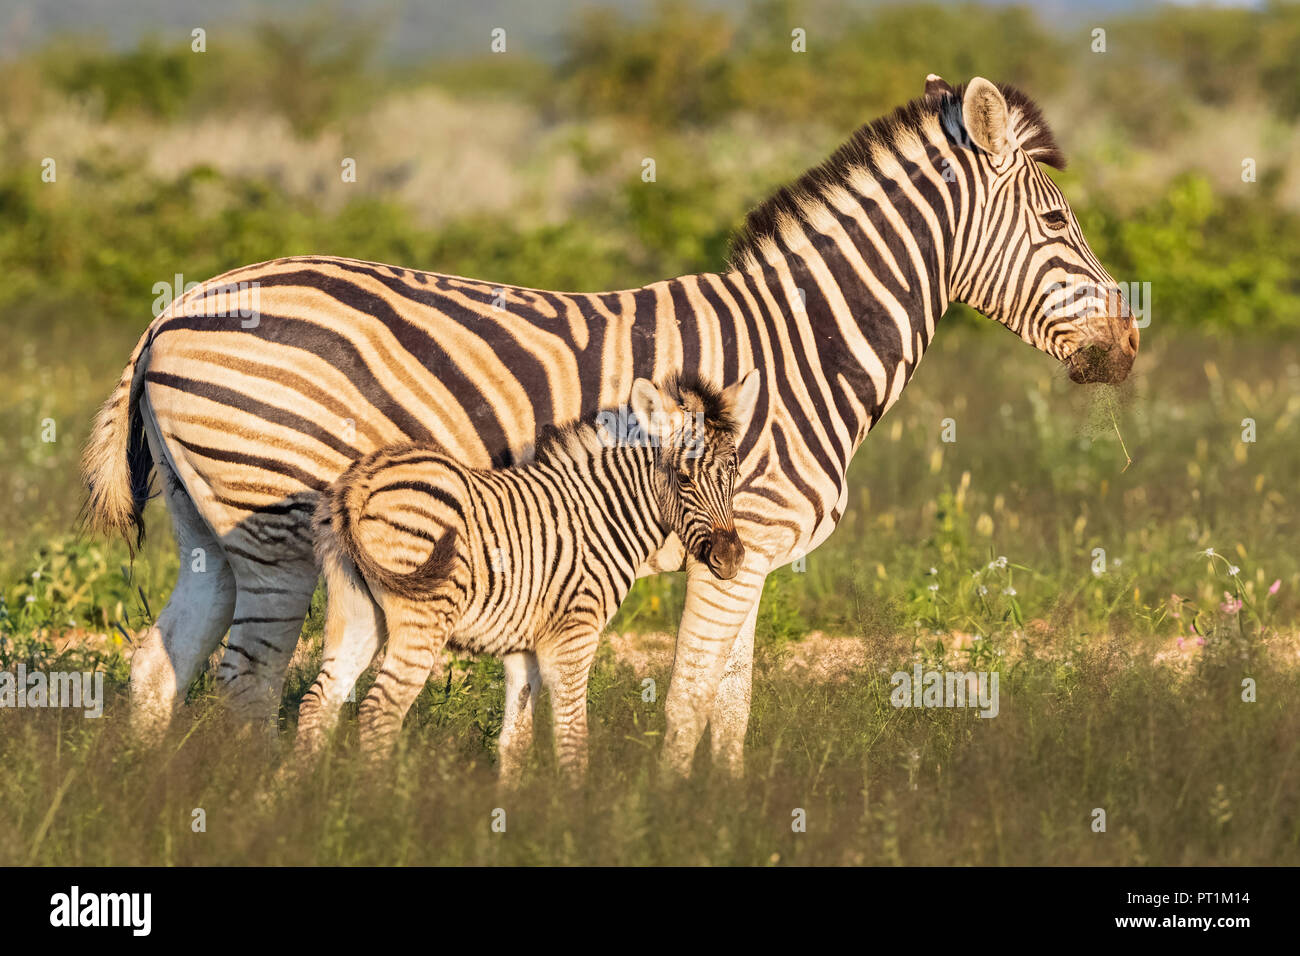 África, Namibia, el Parque Nacional de Etosha, cebras de burchell, Equus quagga burchelli, madre y joven animal Foto de stock